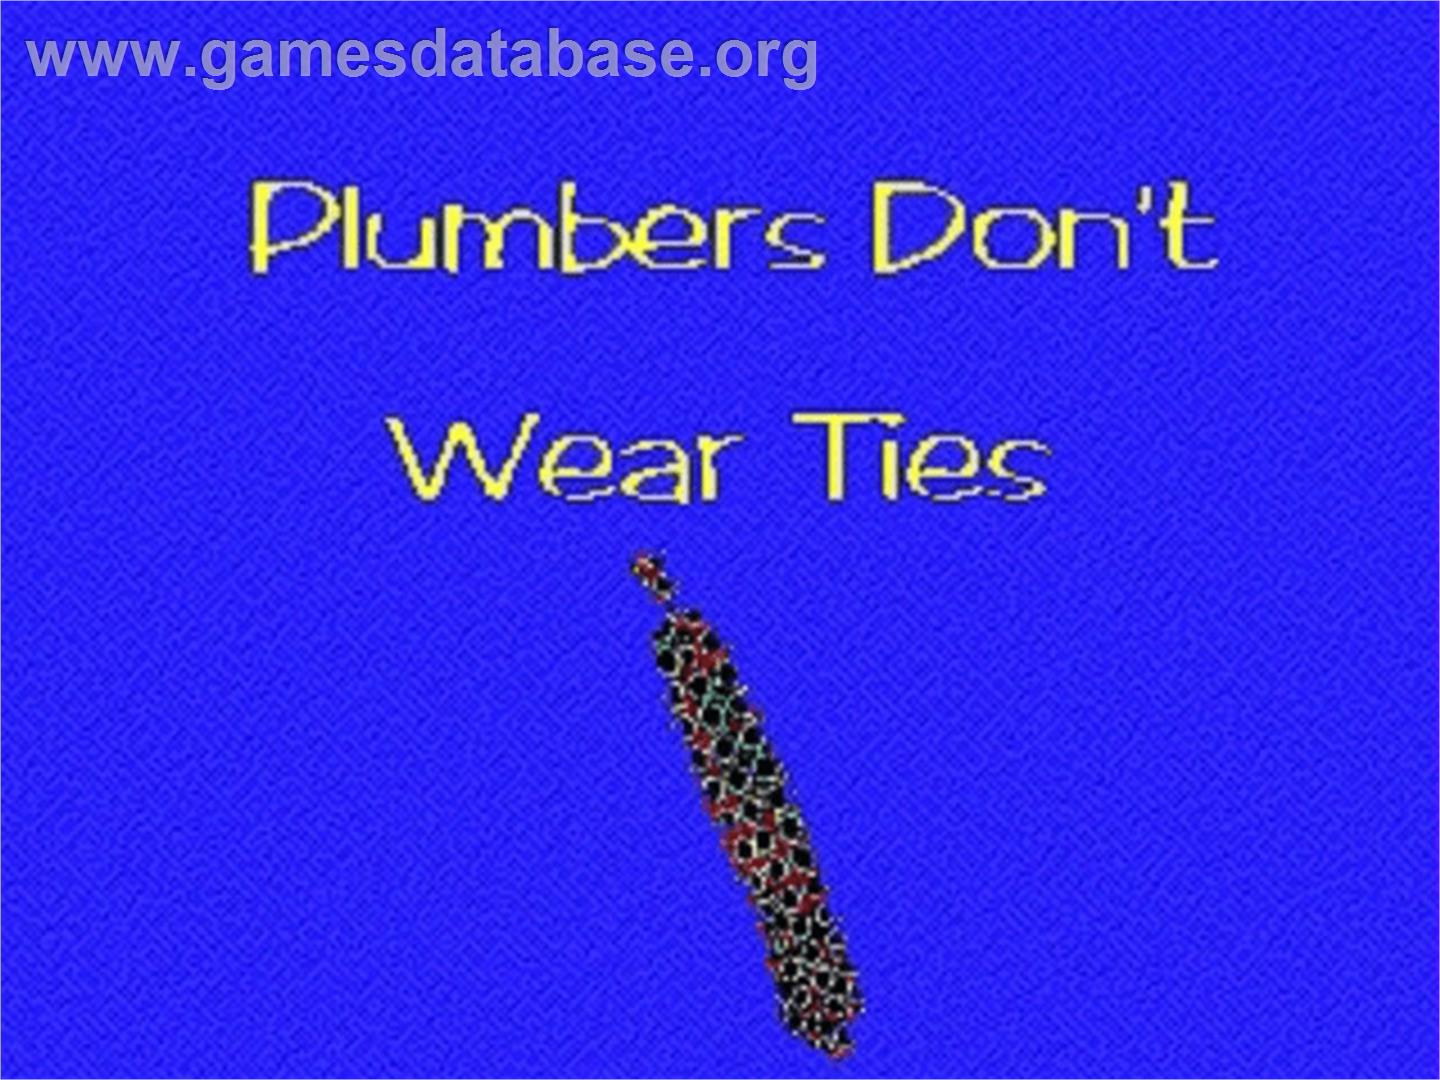 Plumbers Don't Wear Ties - Panasonic 3DO - Artwork - Title Screen